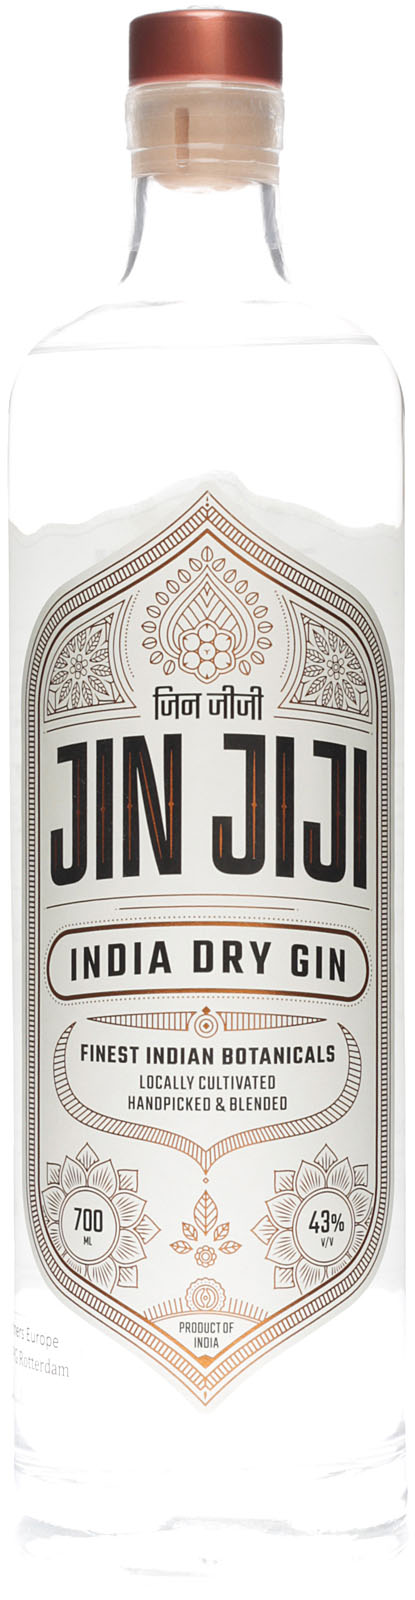 Jin JiJi India Dry Gin 0,7 Liter 43 % Vol. im Shop kauf